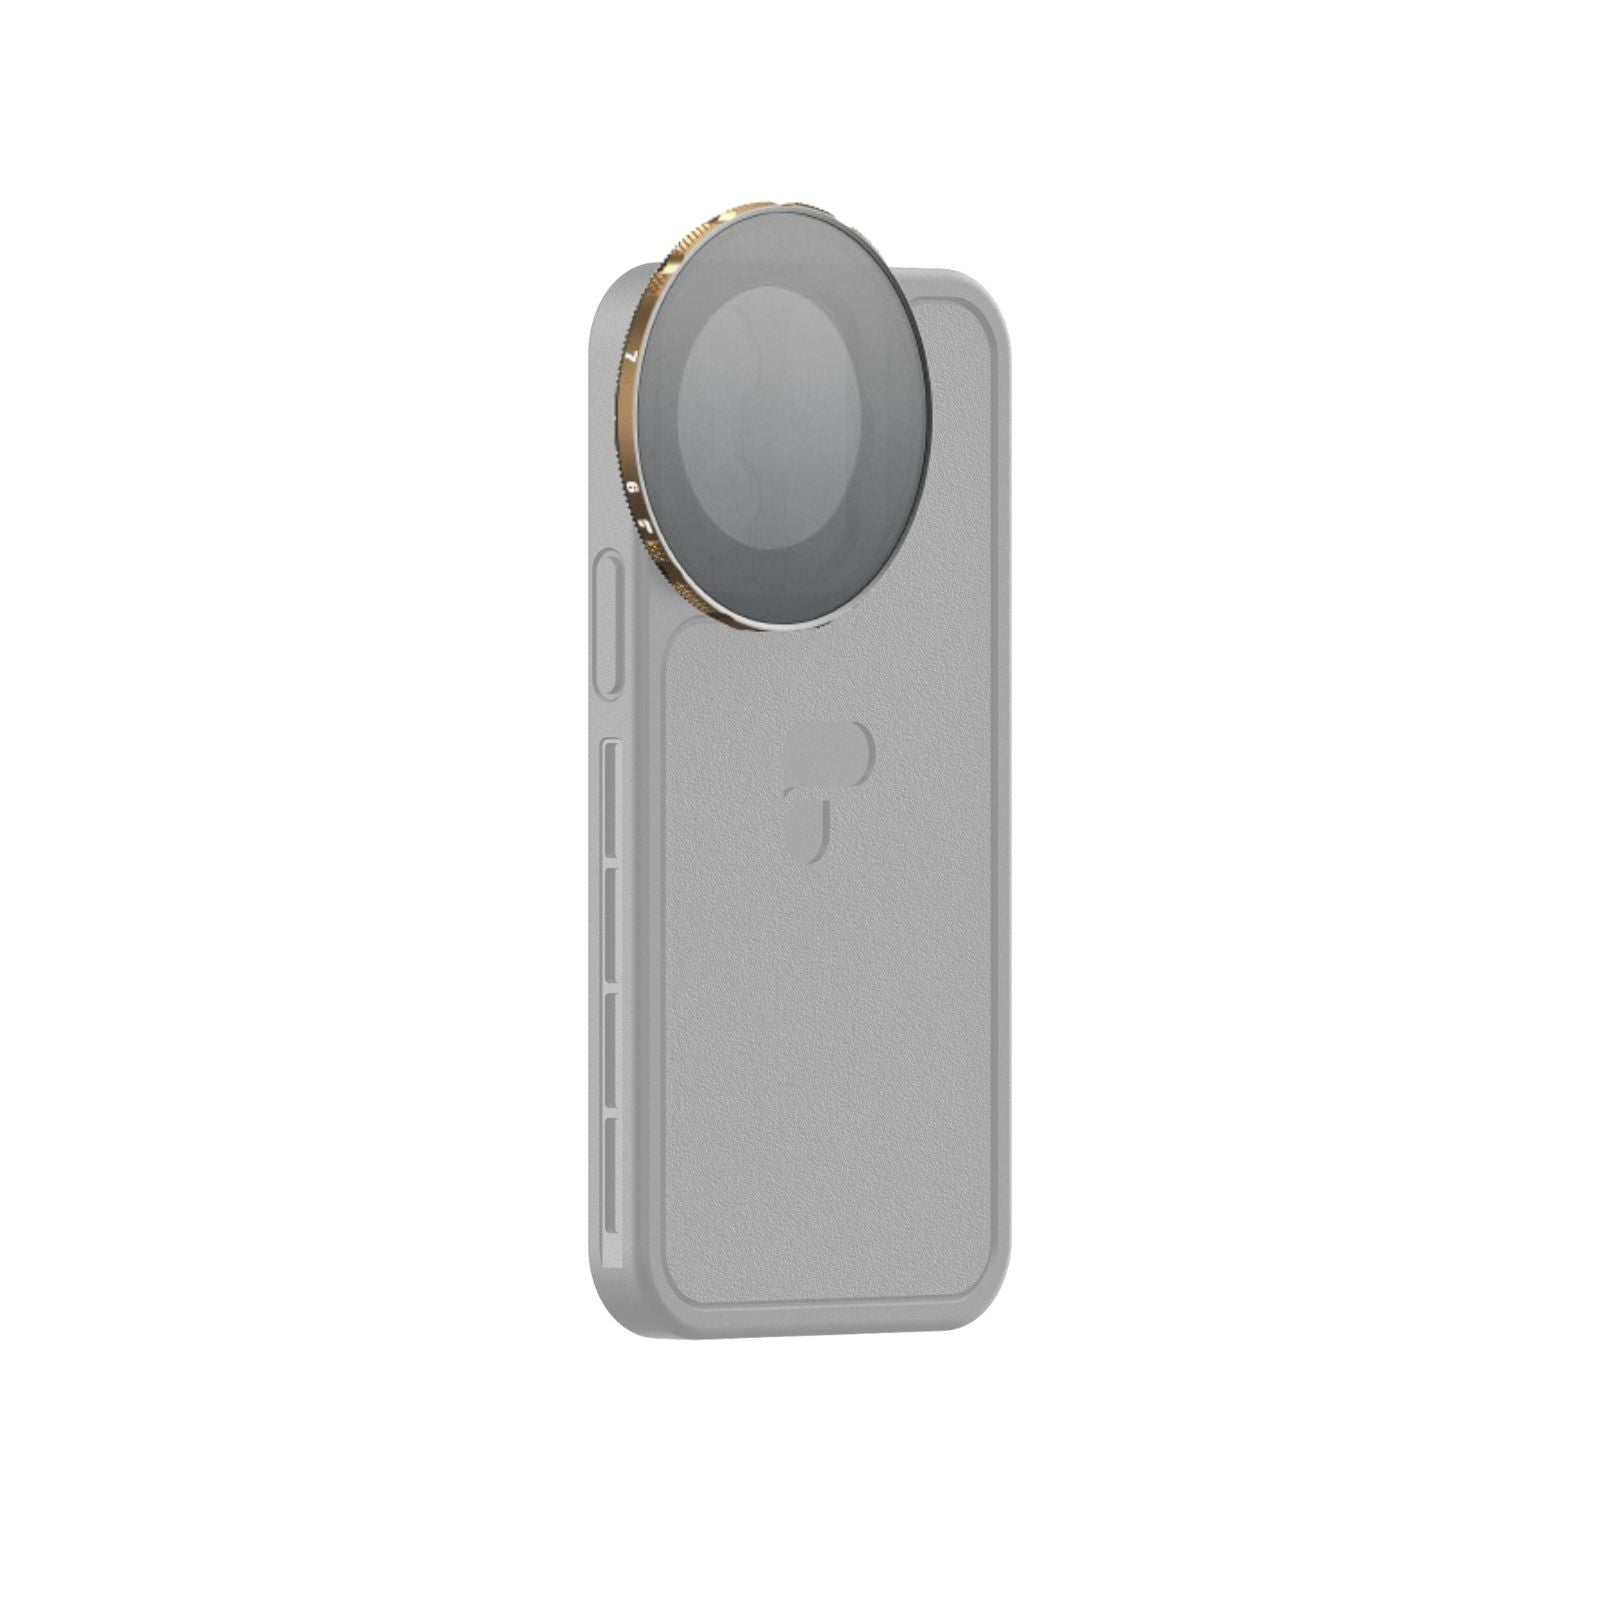 PolarPro LiteChaser Pro VND6-7 フィルター for iPhone 13/14/15 シリーズ